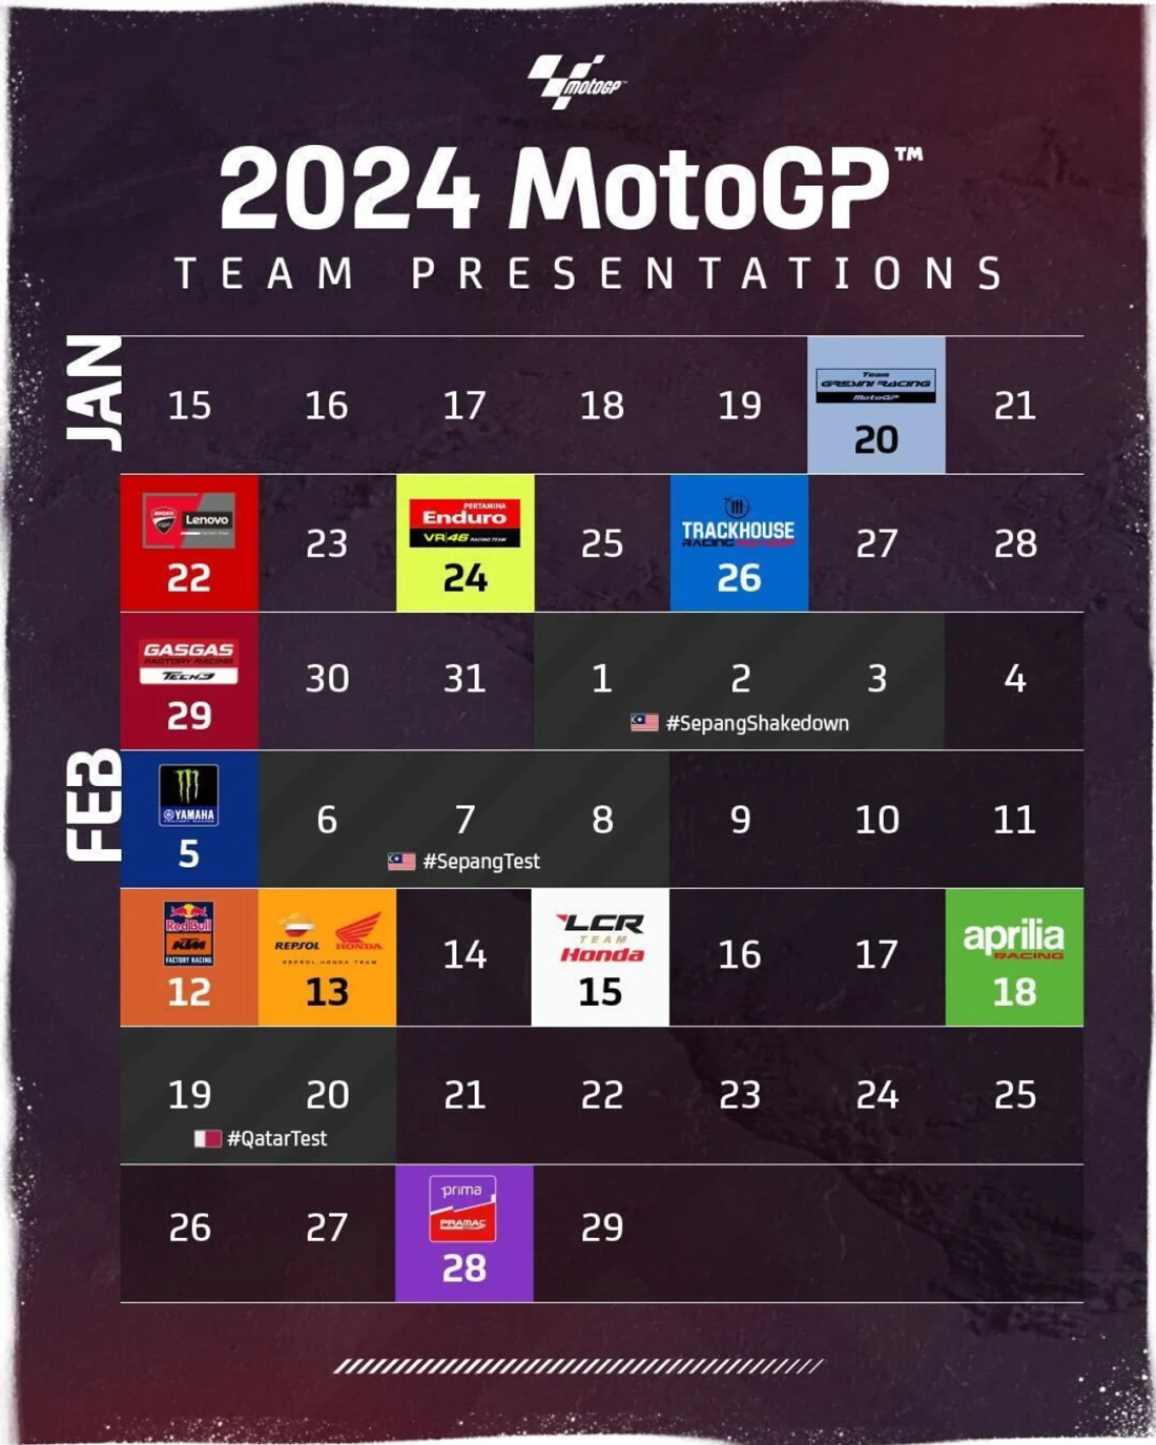 MotoGP – Ανακοινώθηκαν οι ημερομηνίες παρουσίασης όλων των ομάδων για το 2024